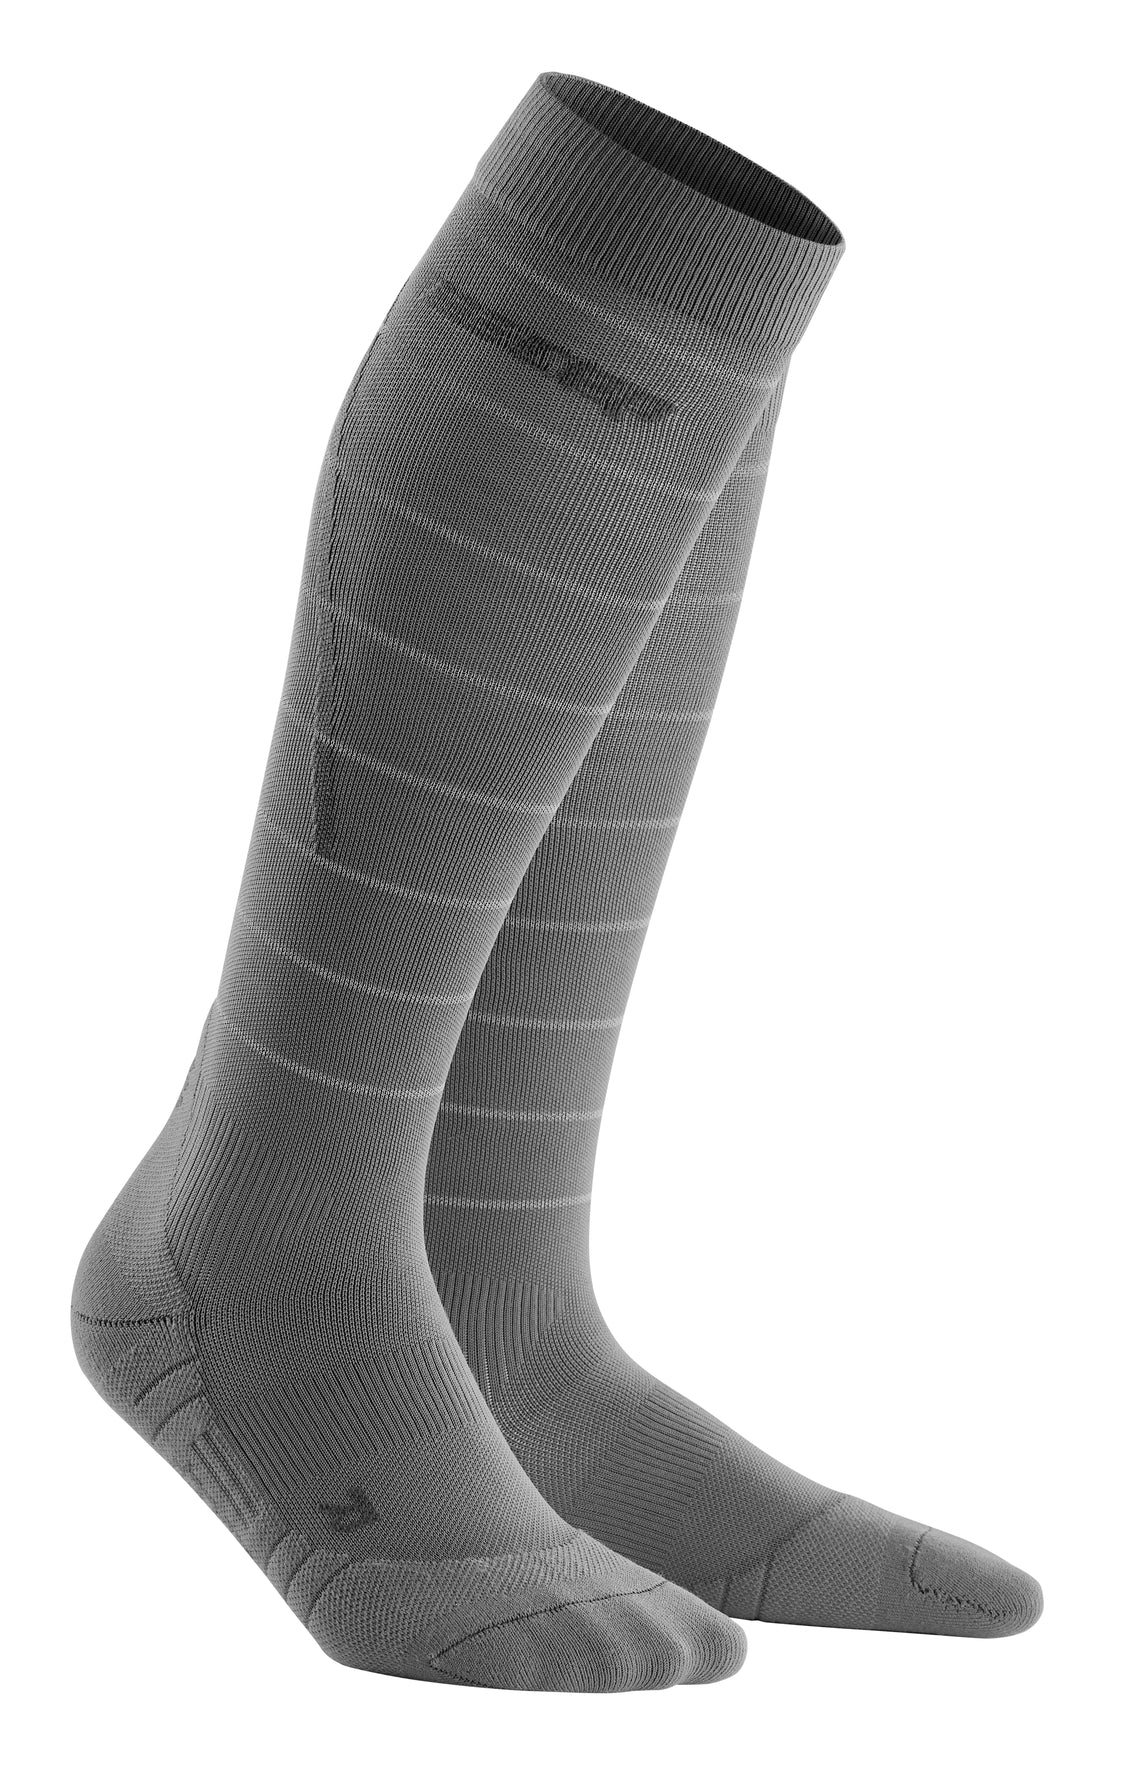 Reflective Knee High Compression Socks | Compression Care